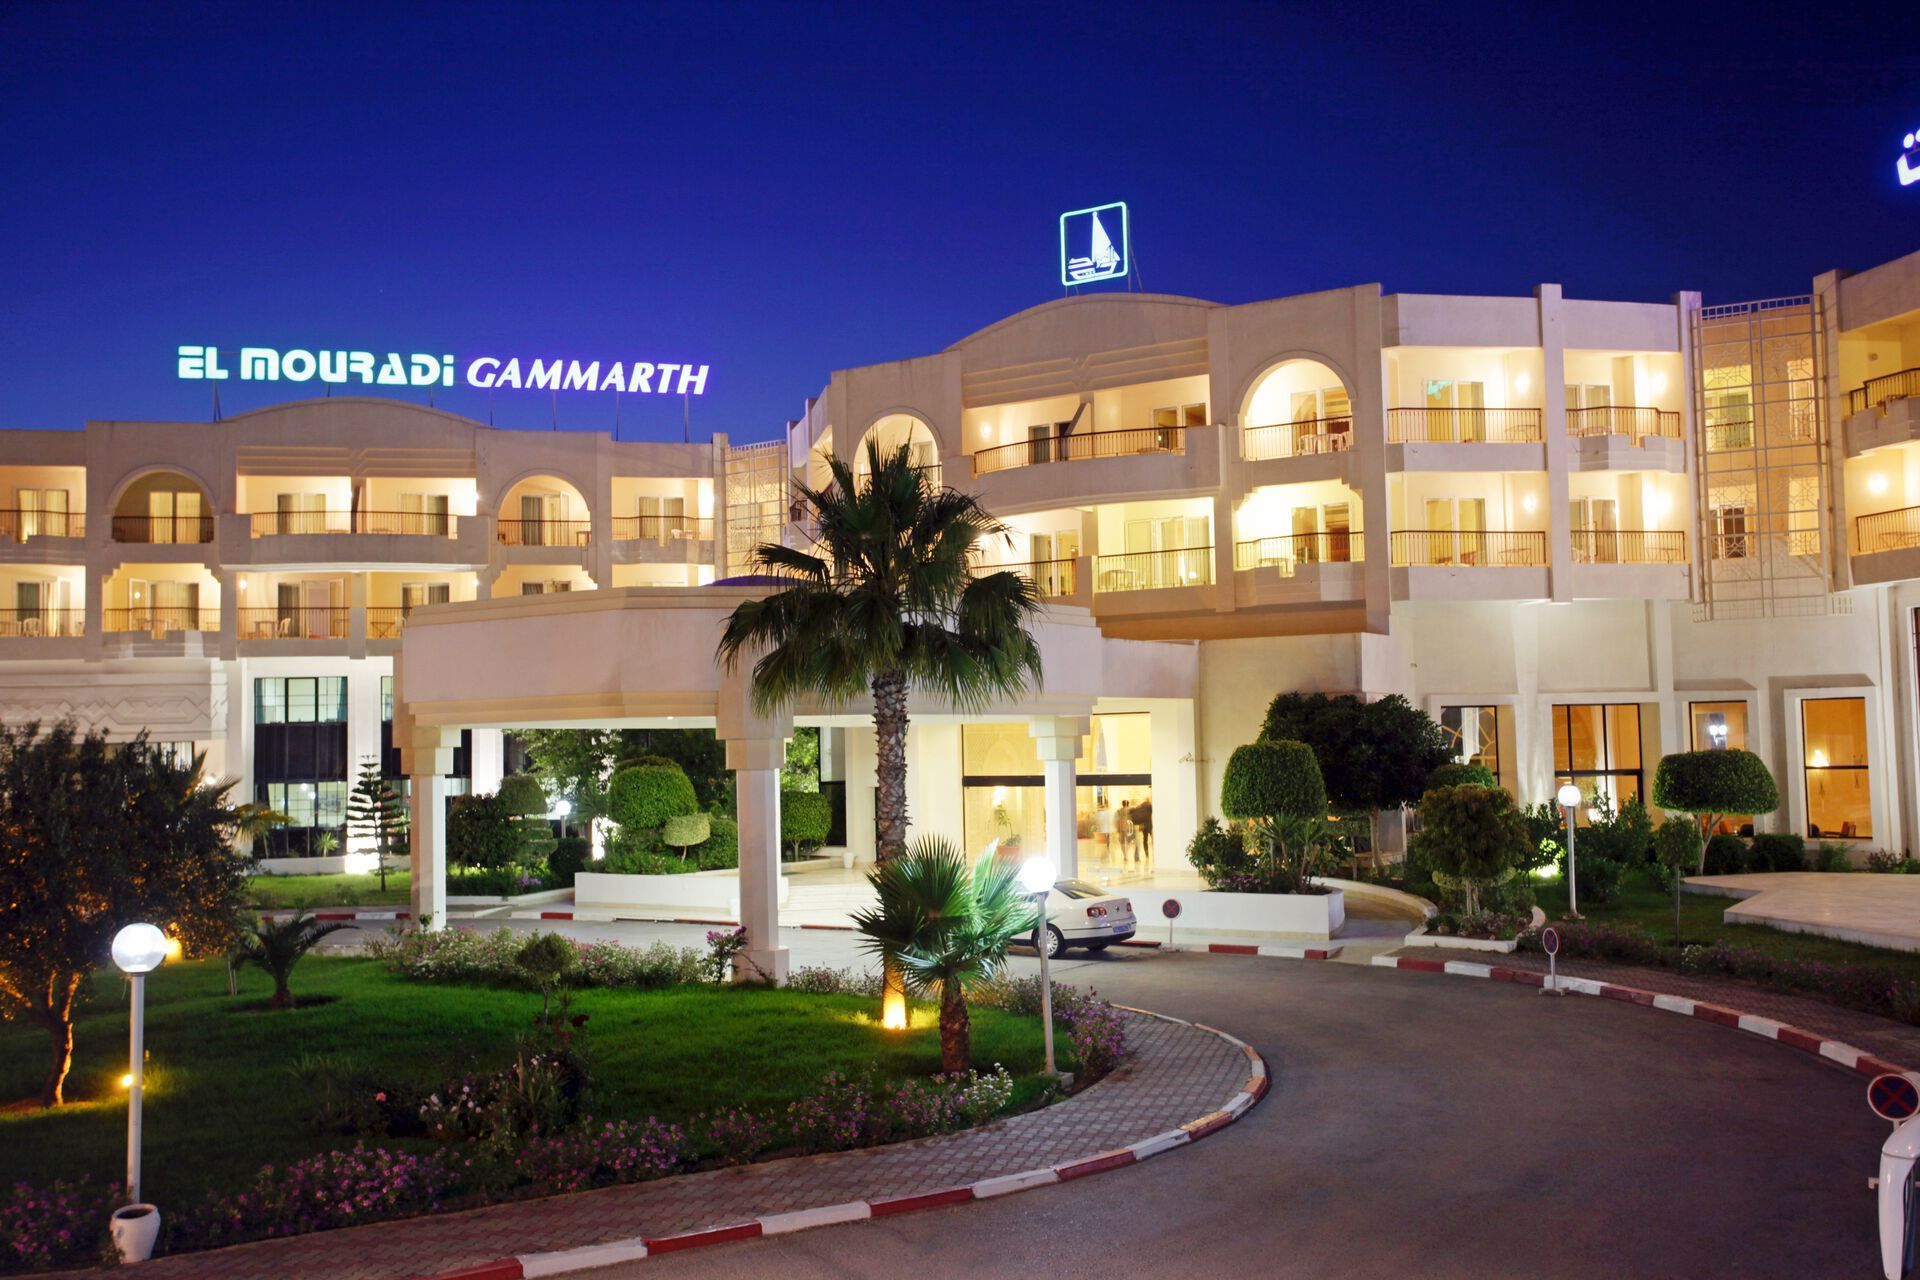 Tunisie - Gammarth - Hôtel El Mouradi Gammarth 5*